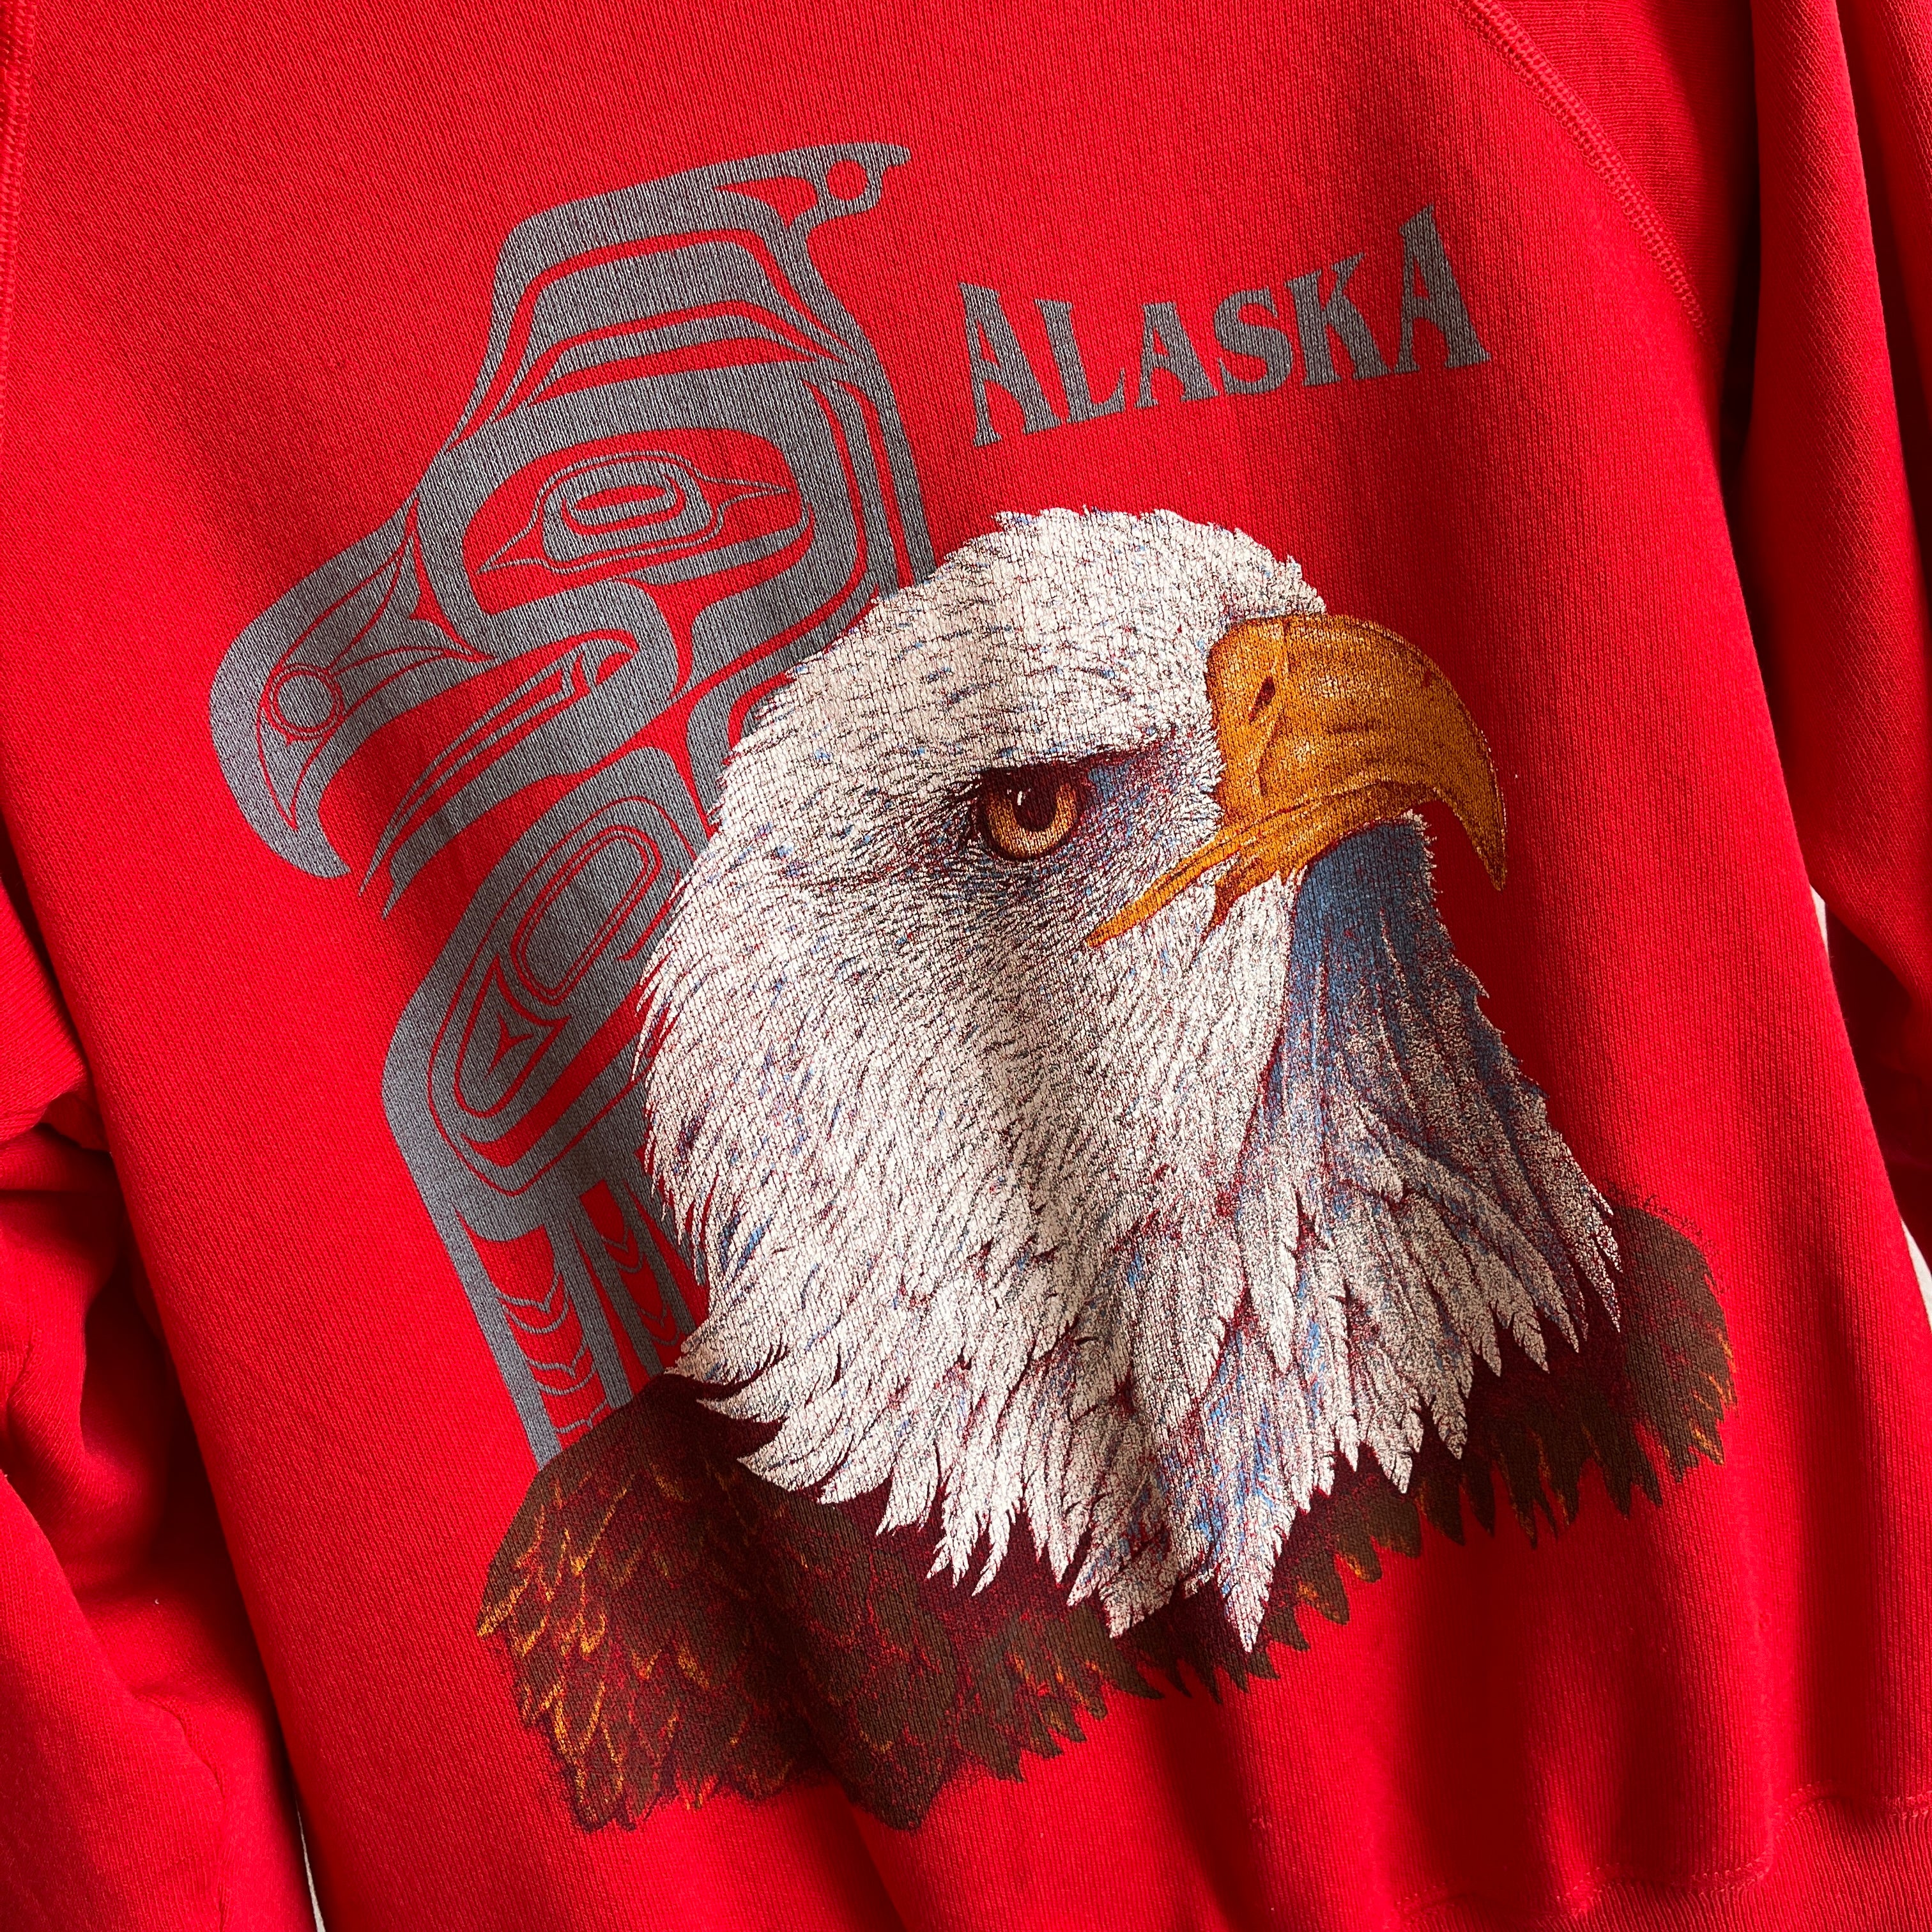 1990s Alaska Eagle Tourist Sweatshirt